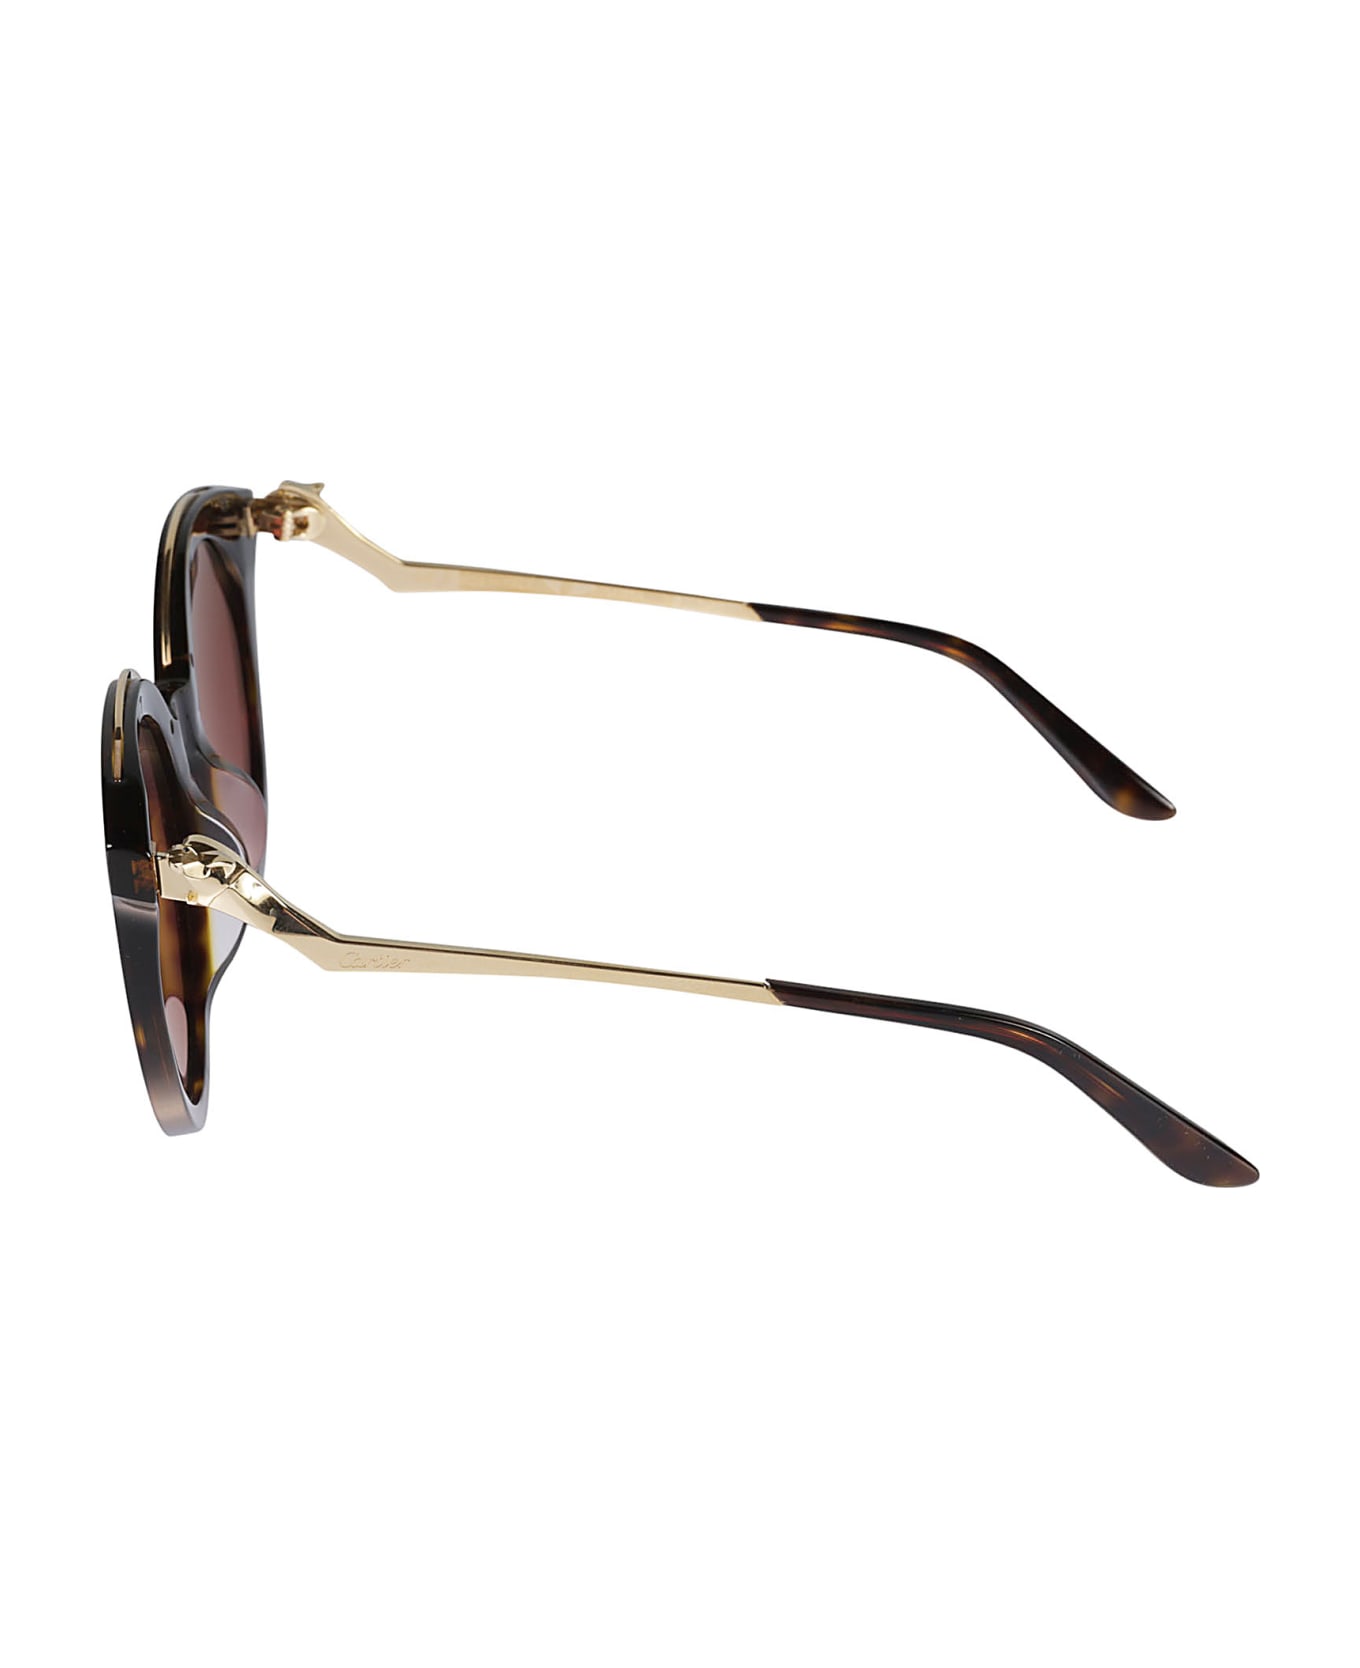 Cartier Eyewear Cay Eye Sunglasses - 002 havana gold red